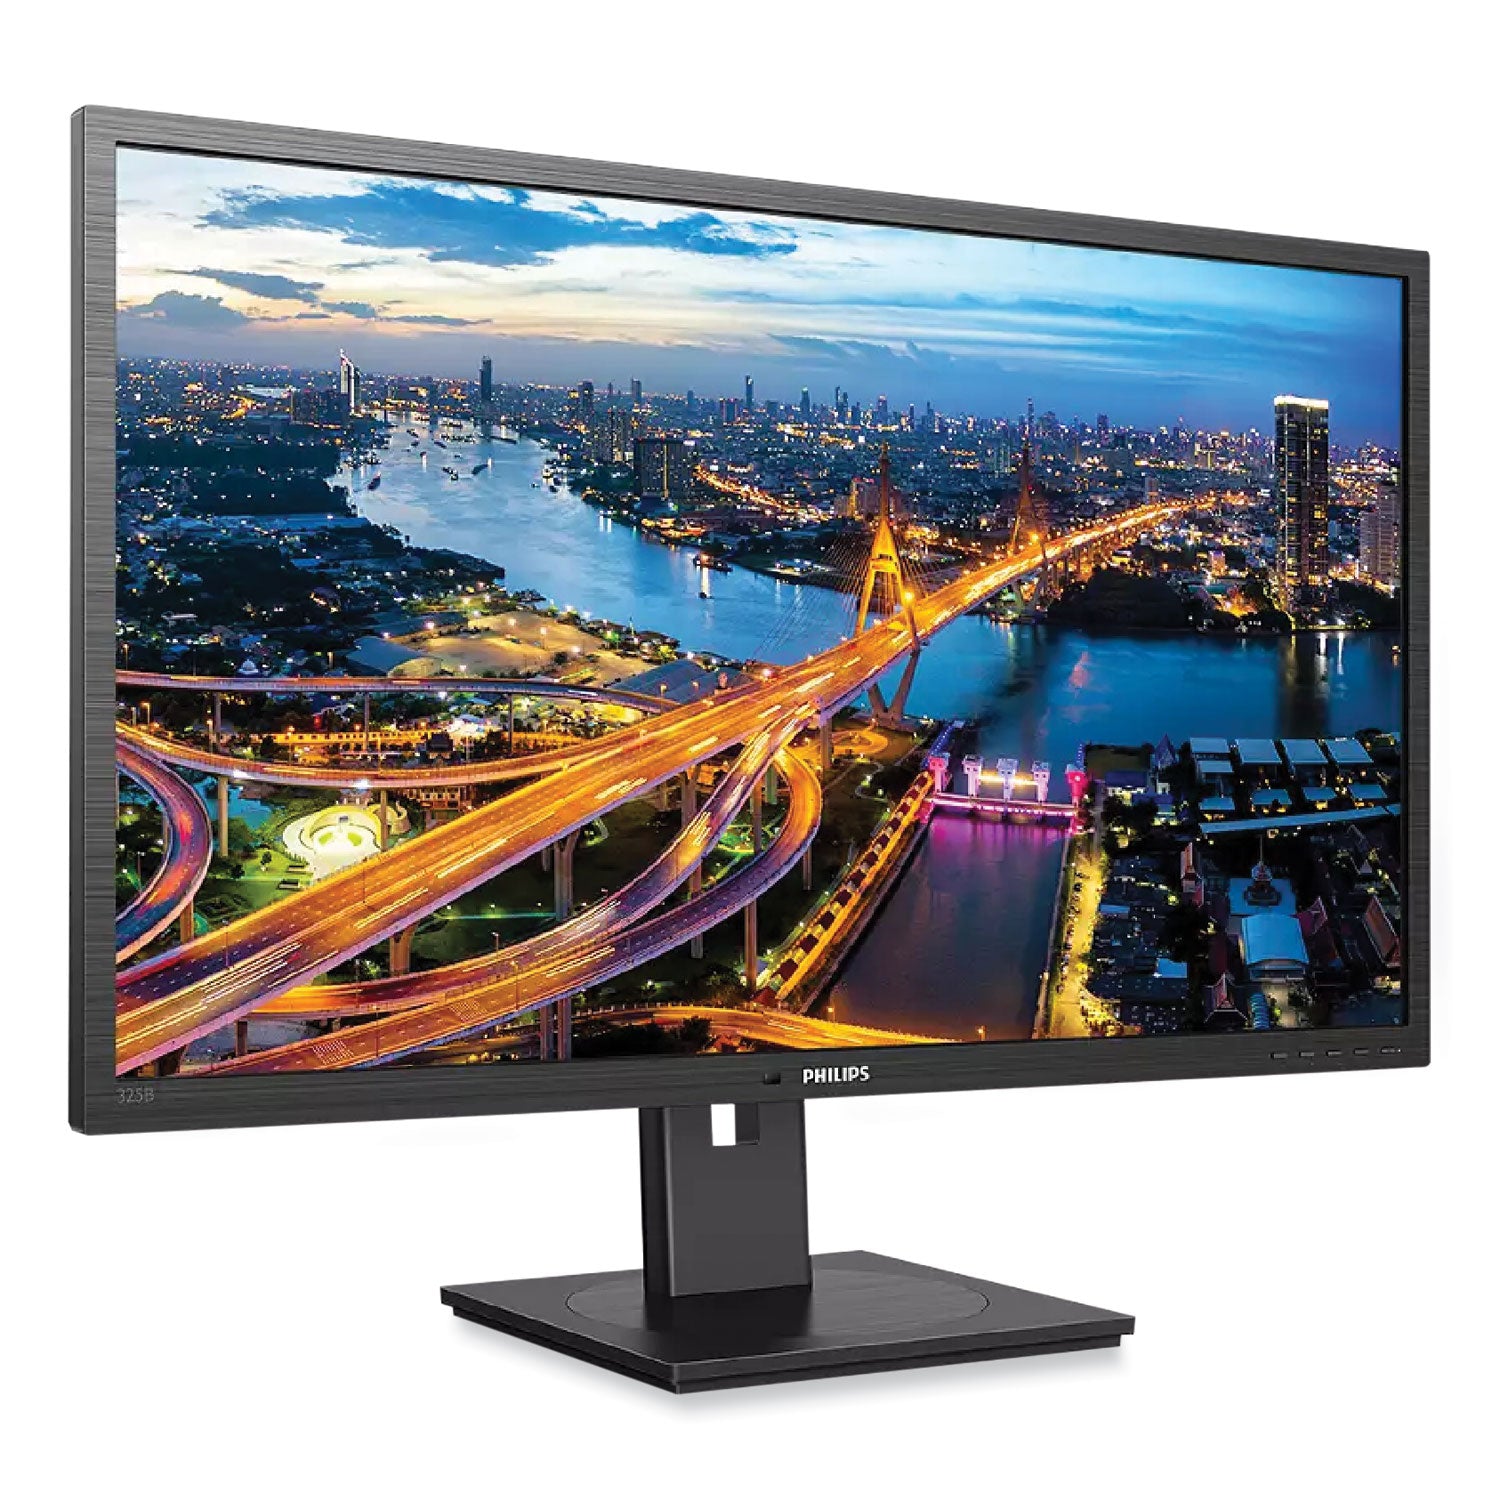 lcd-monitor-with-power-sensor-315-ips-panel-2560-pixels-x-1440-pixels_psp325b1l - 2